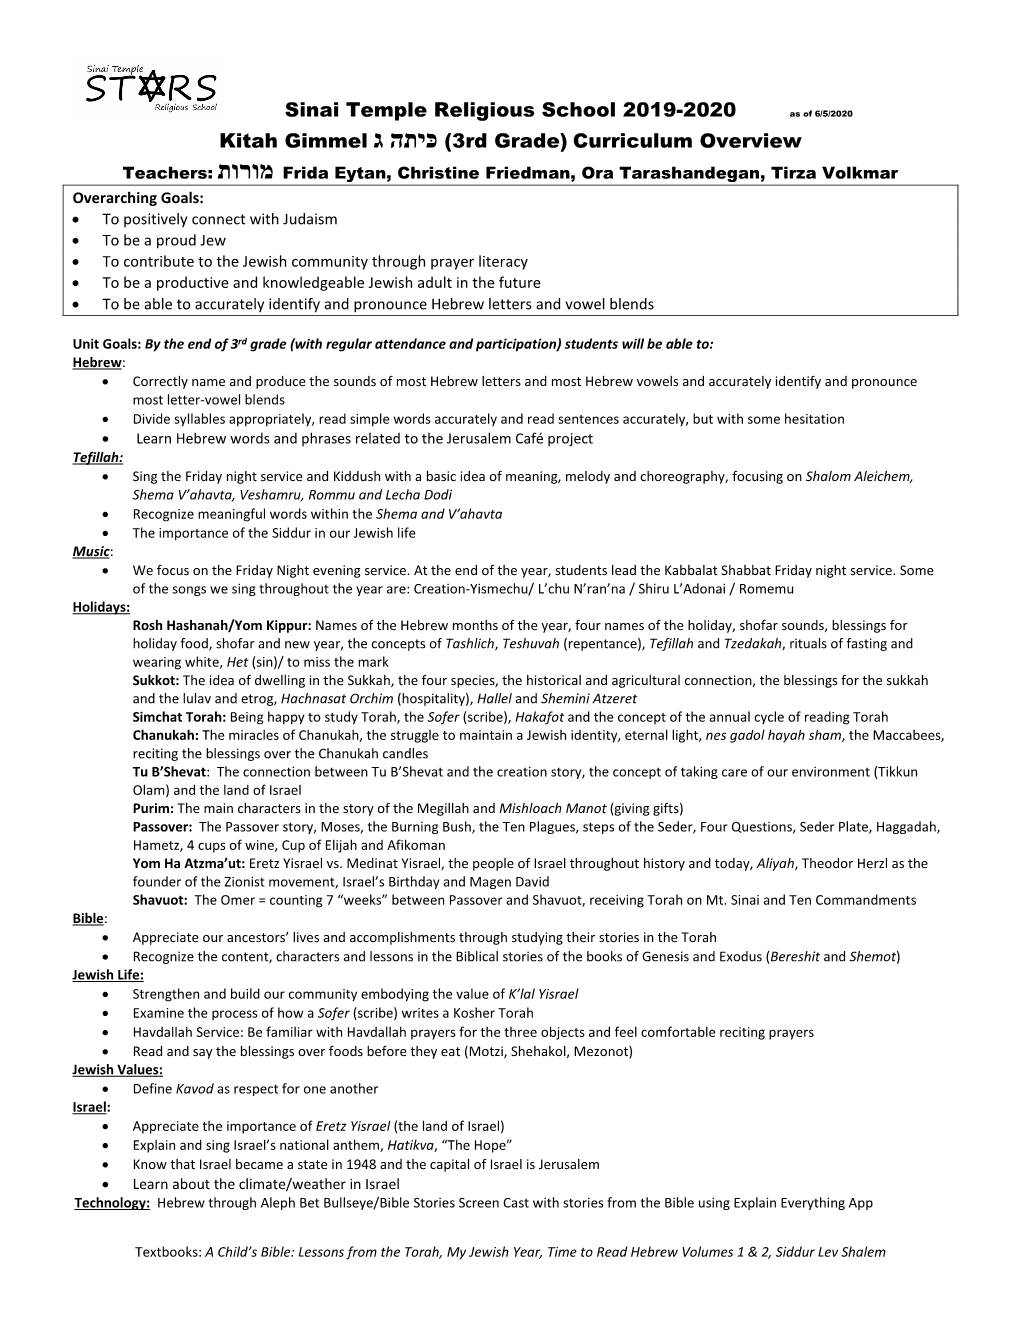 Kitah Gimmel ג התיכּ (3Rd Grade) Curriculum Overview